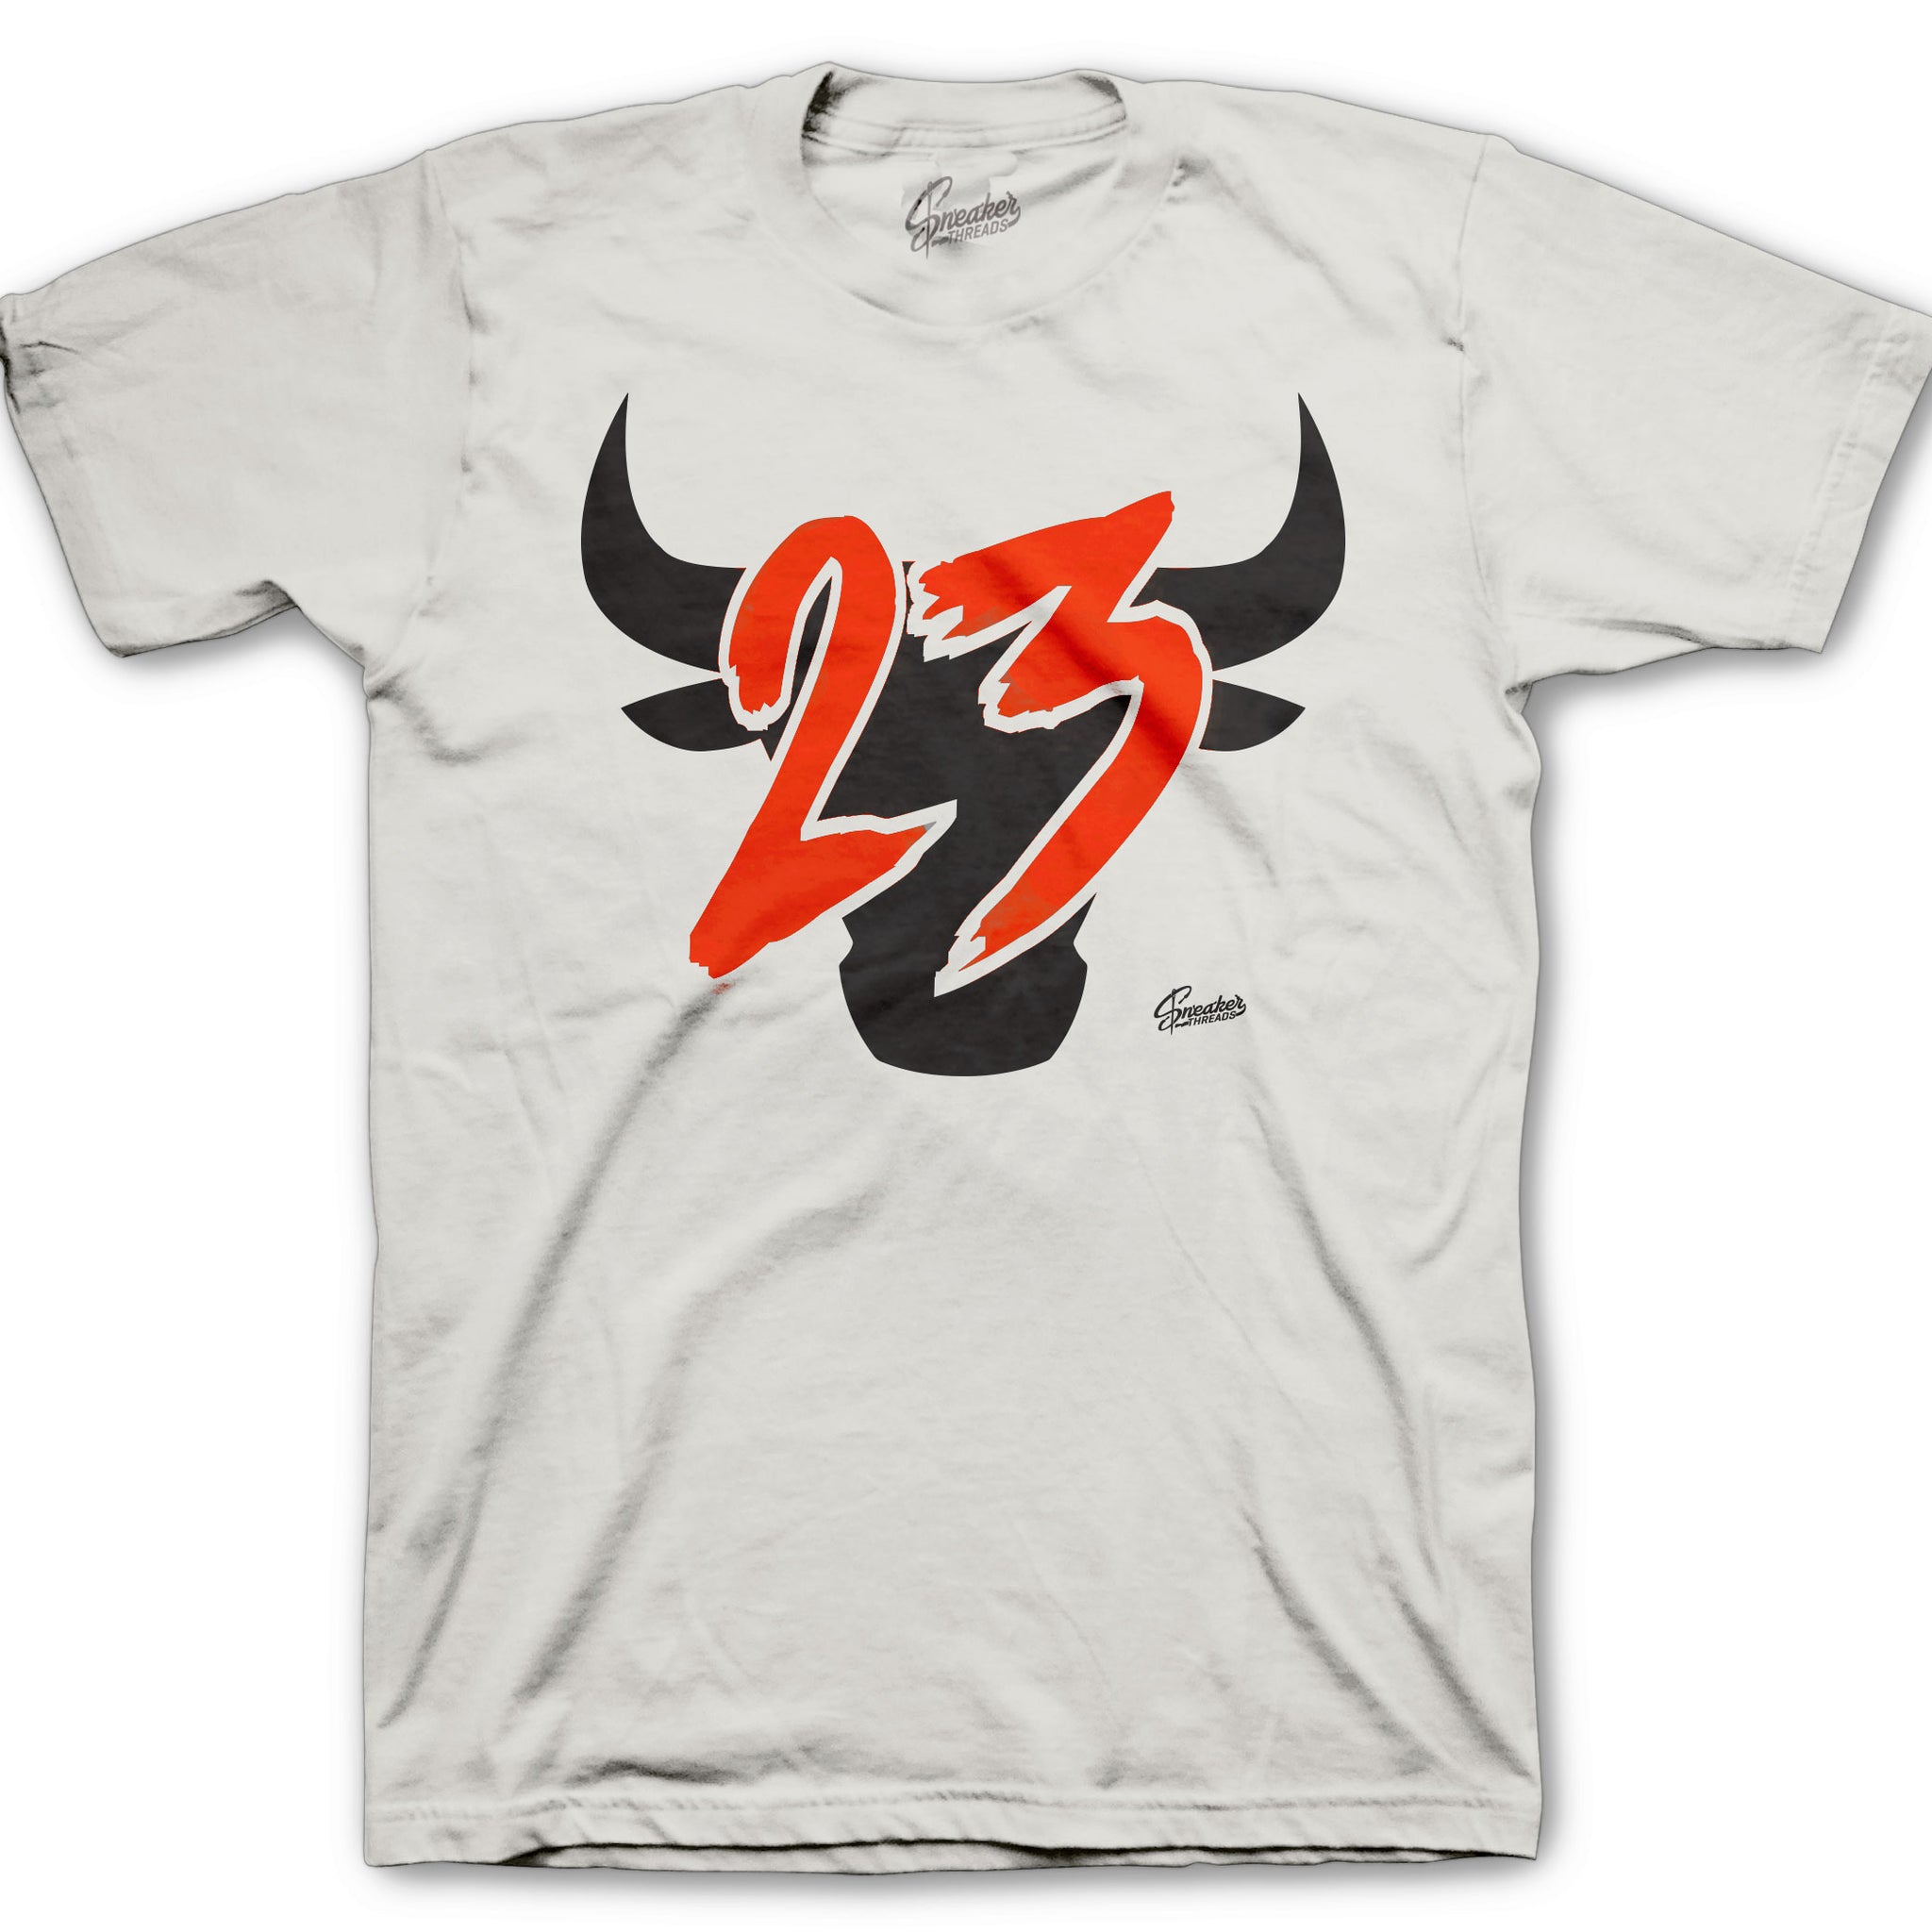 Jordan Toro shirt to match with Snakeskin Bone 11's